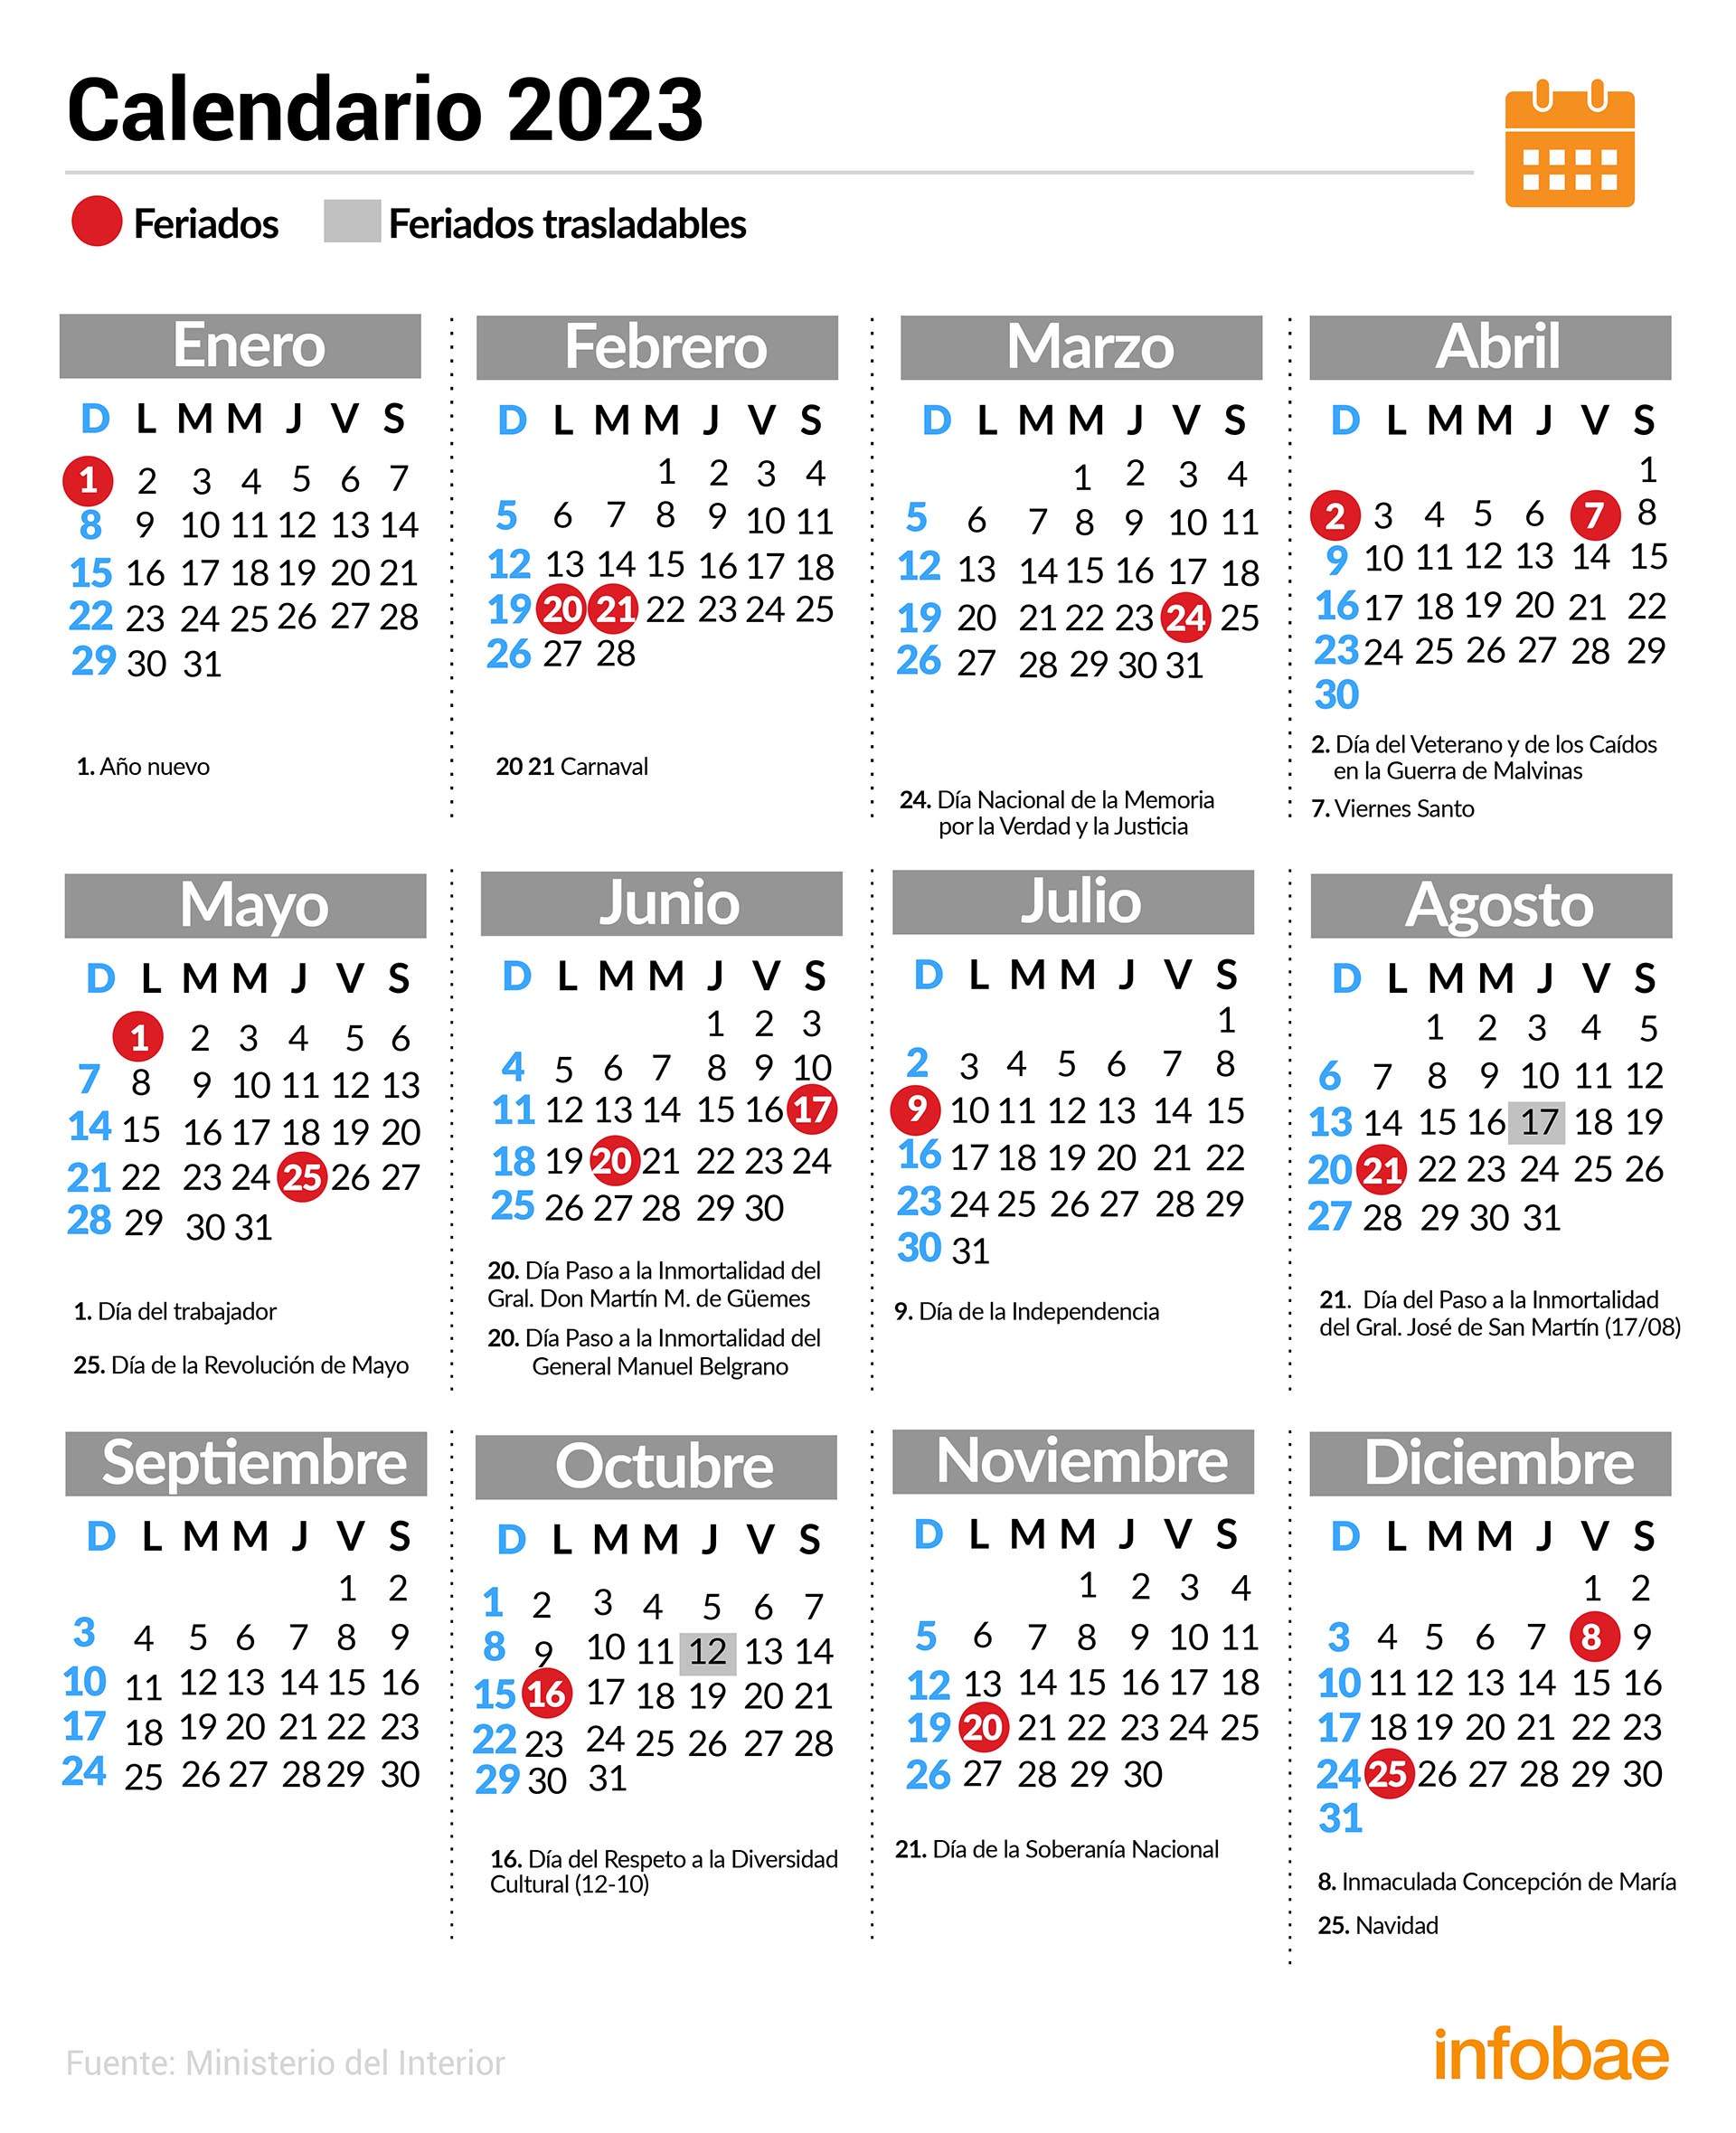 Calendario de Feriados 2023. 